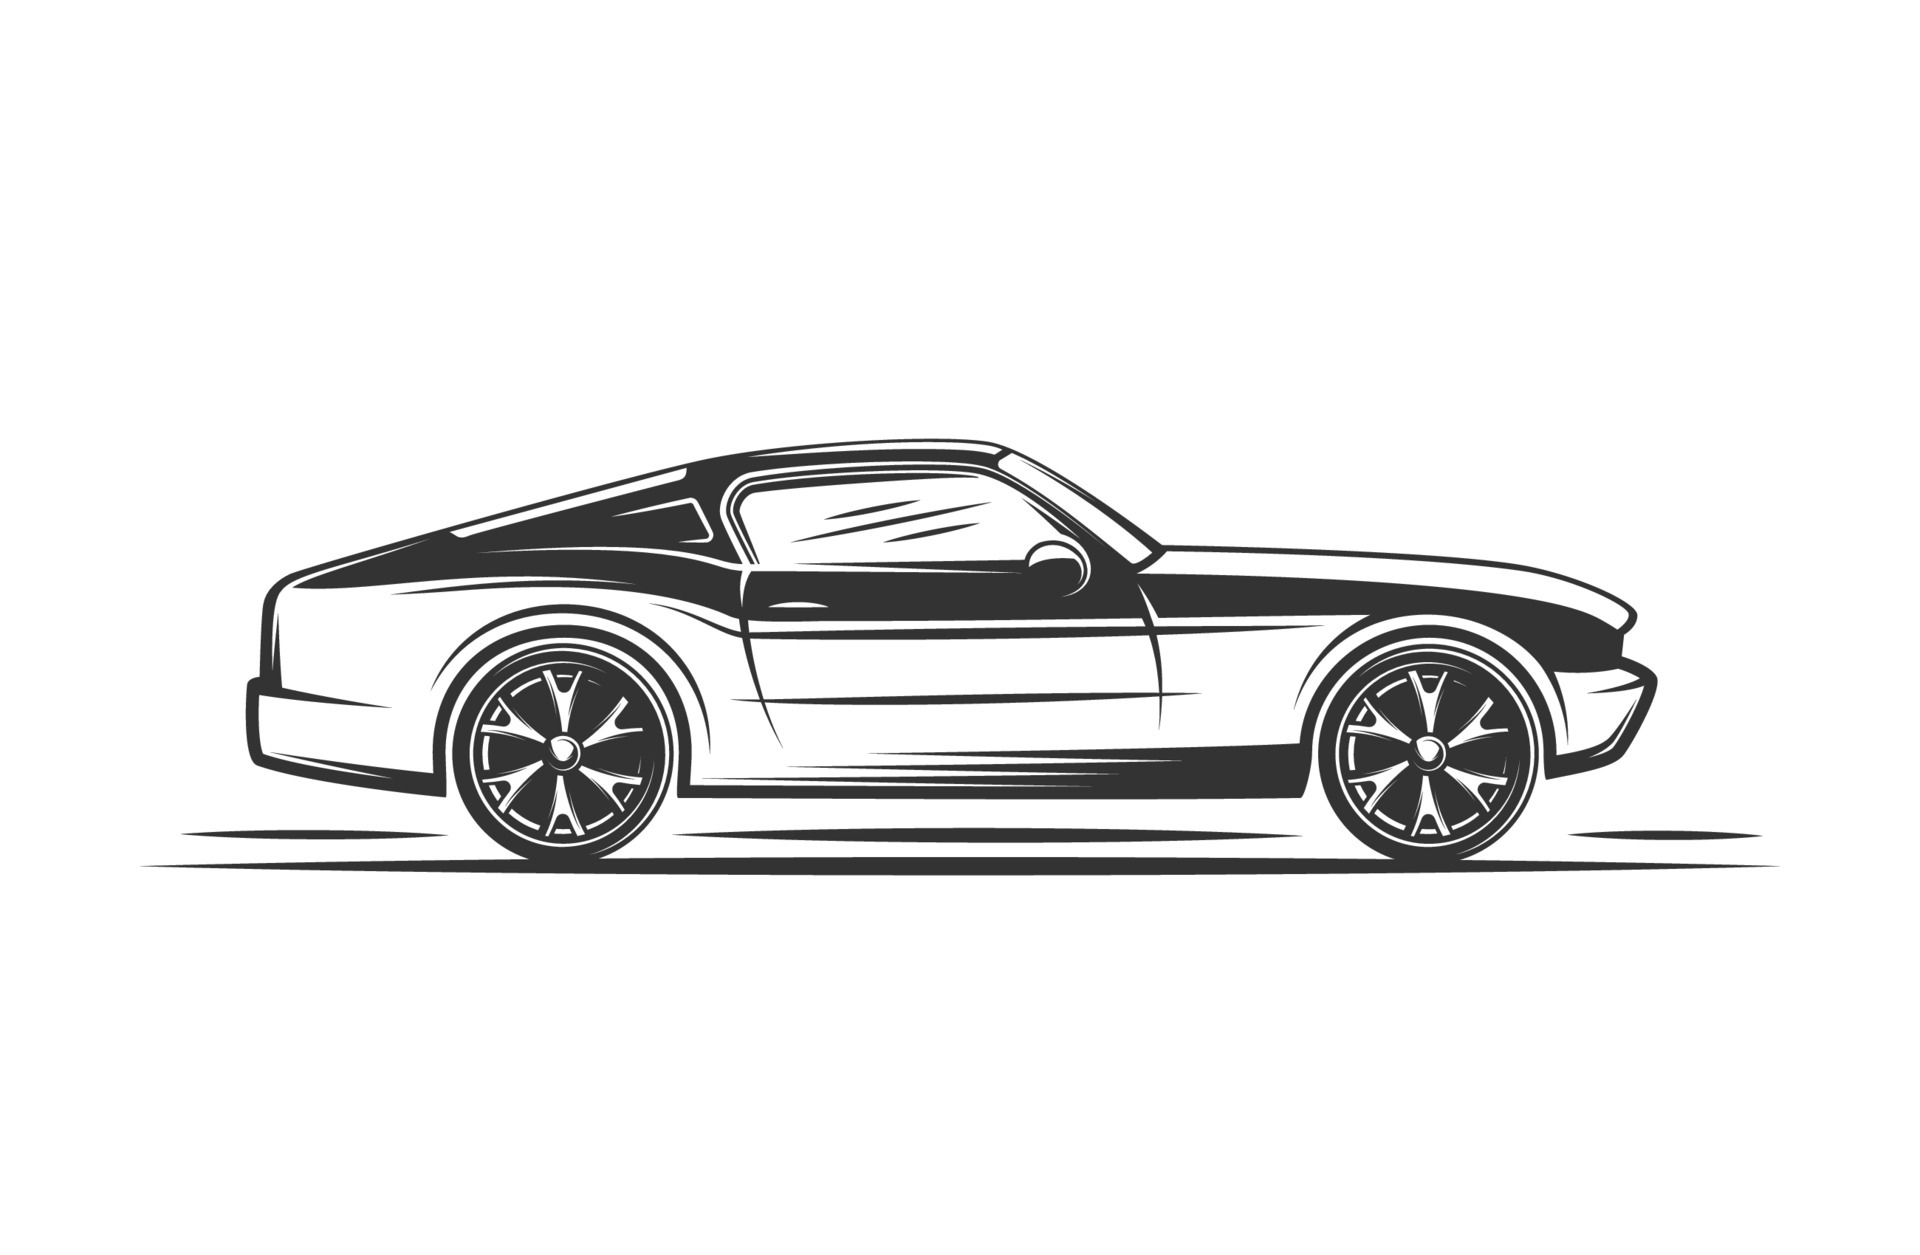 Car Side View Sketching Tutorial - Car Body Design